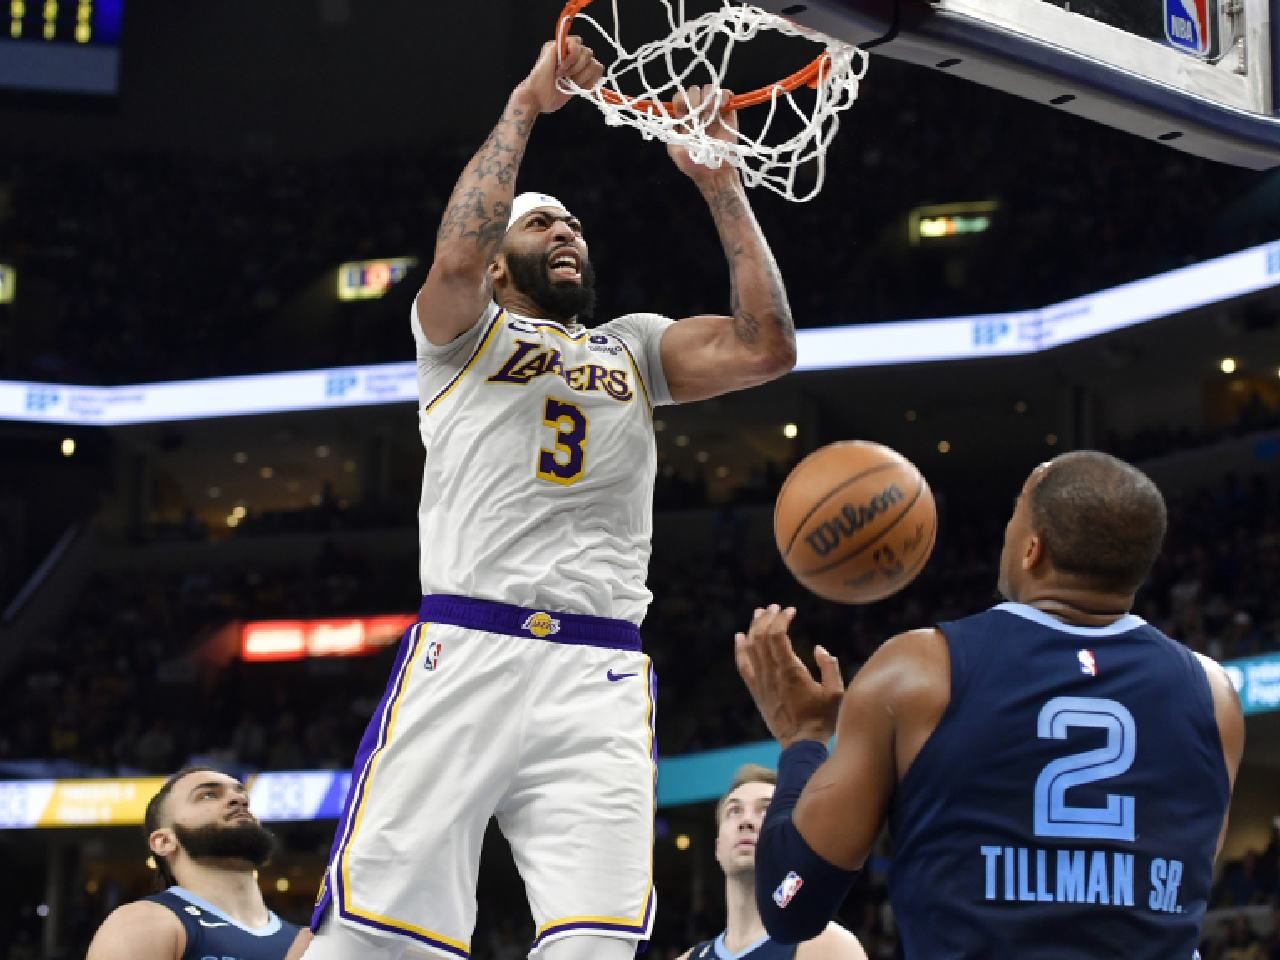 Watch video: Anthony Davis’ arm injury; Lakers fans on tenterhooks!